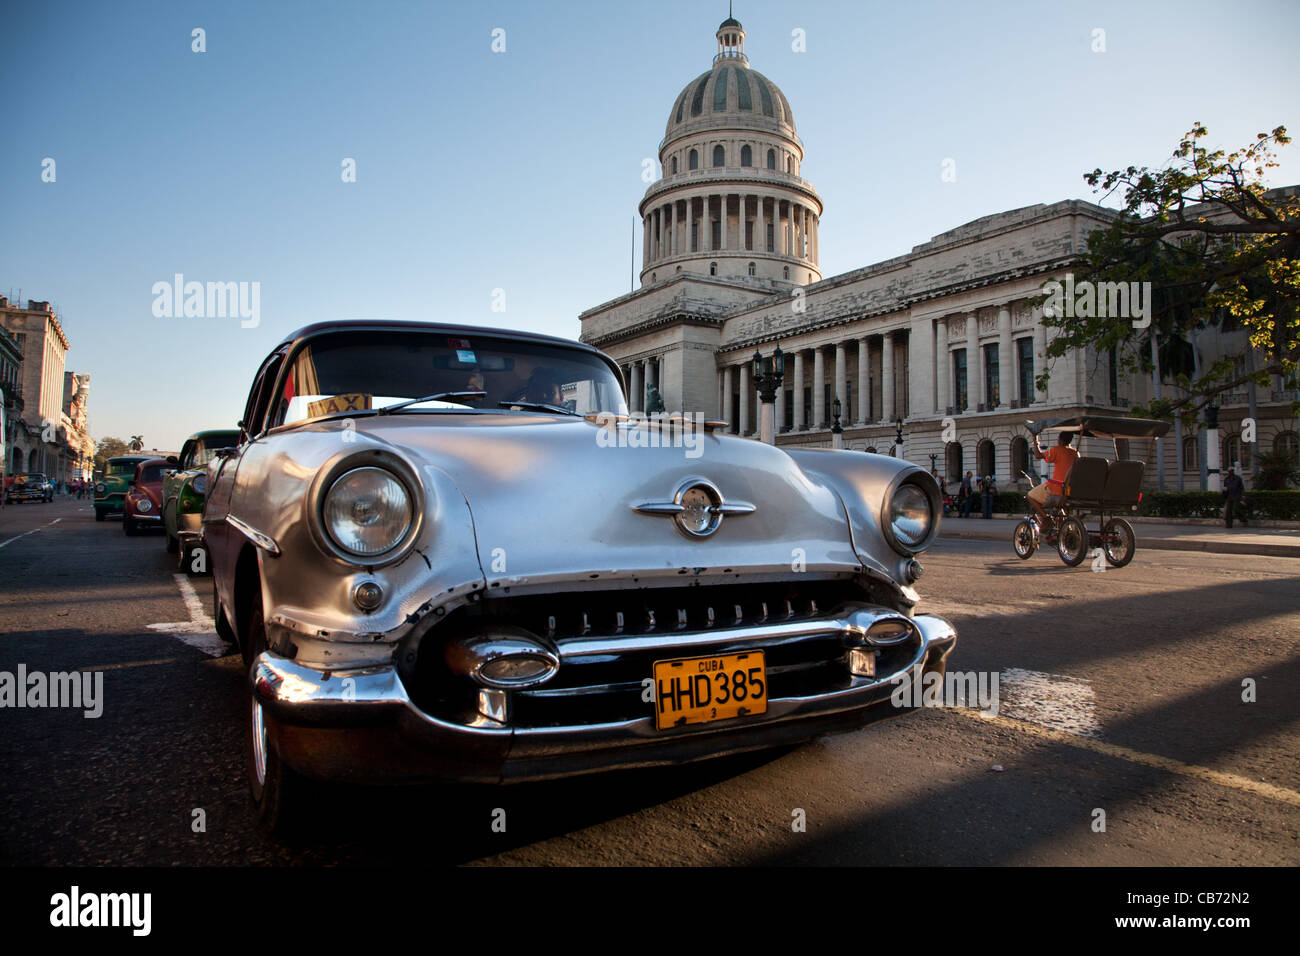 Vintage Oldsmobile parked in front of the Capitolio, Havana (La Habana), Cuba Stock Photo